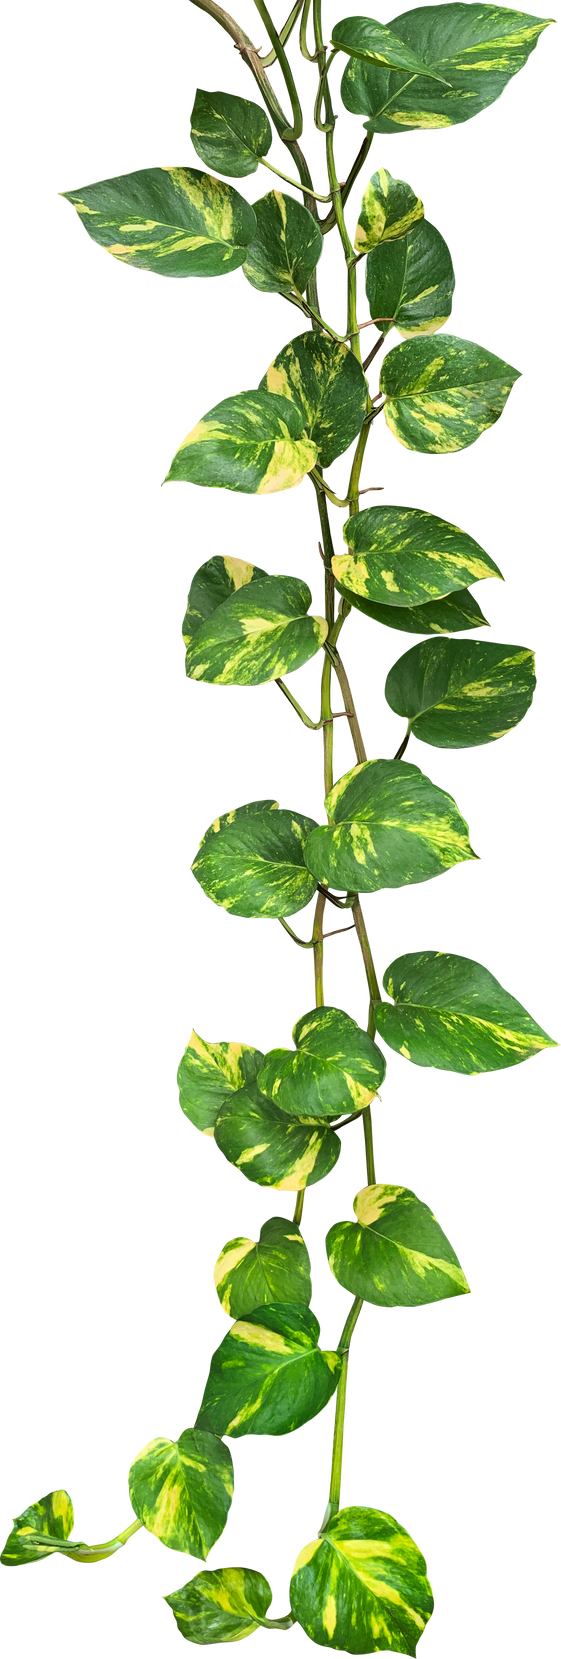 Heart shaped green variegated leaves hanging vine plant bush of devil's ivy or golden pothos tropical houseplant